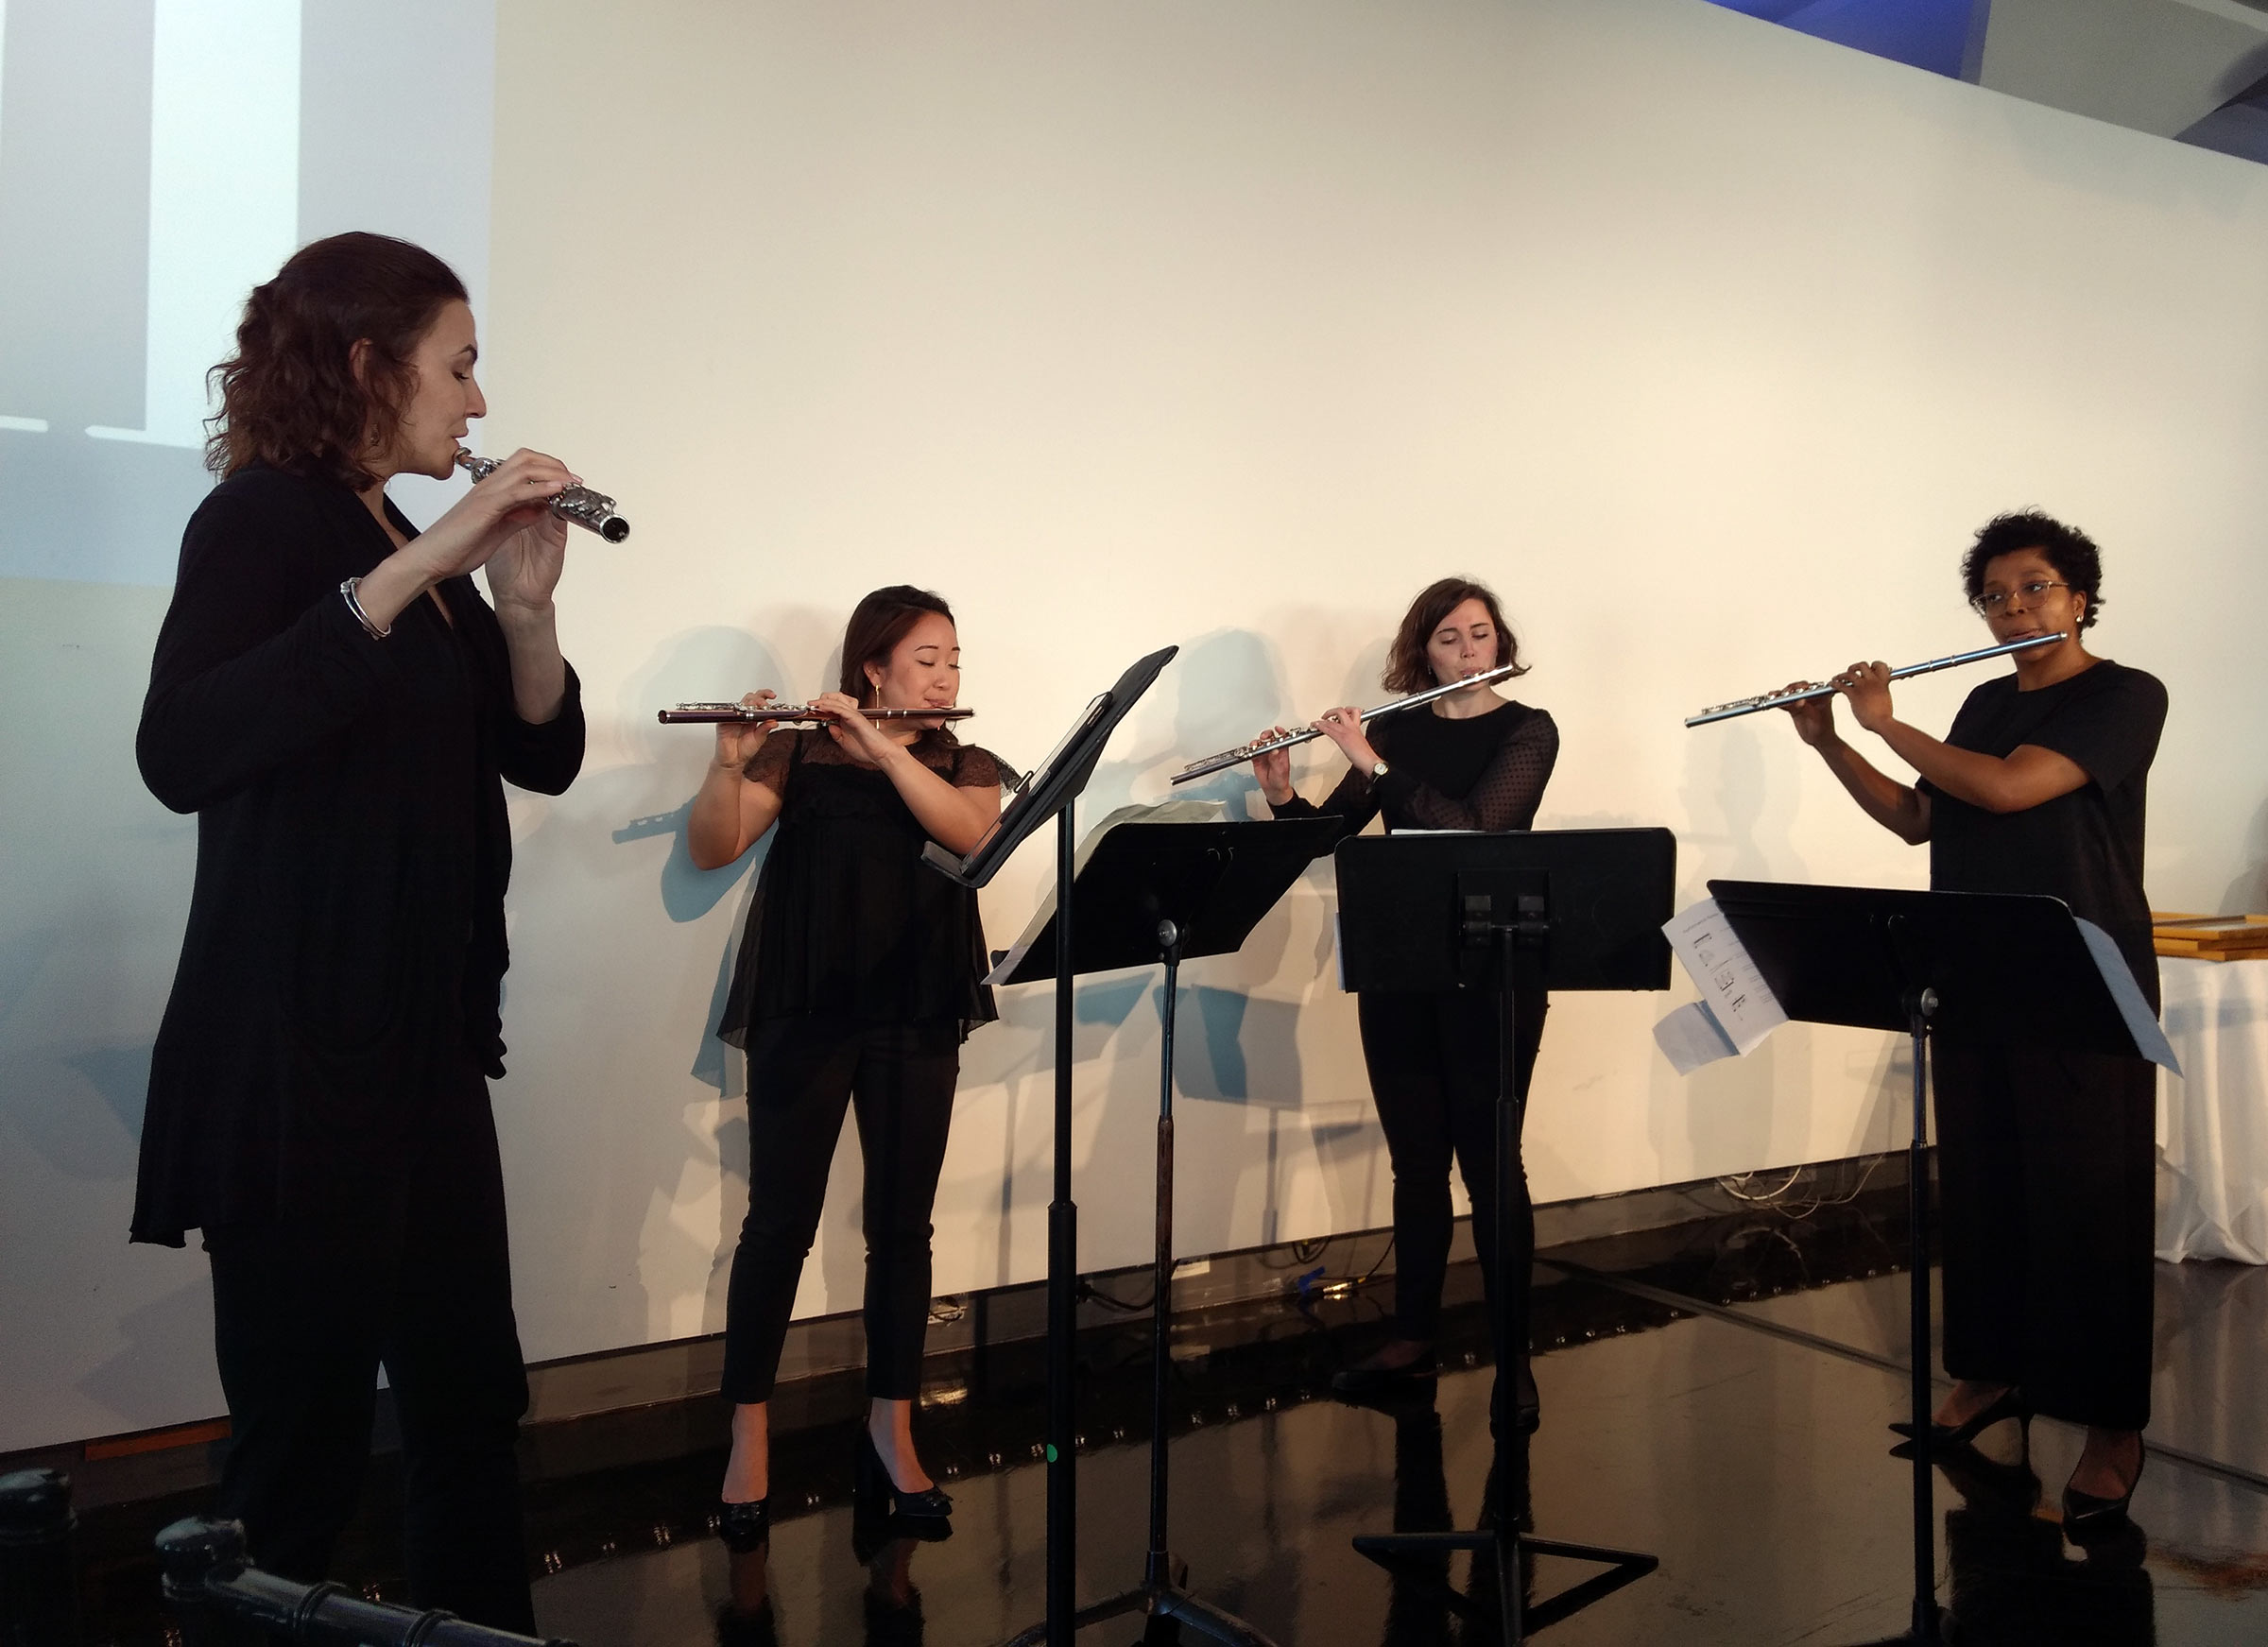 Flute quartet performance during the ceremony.